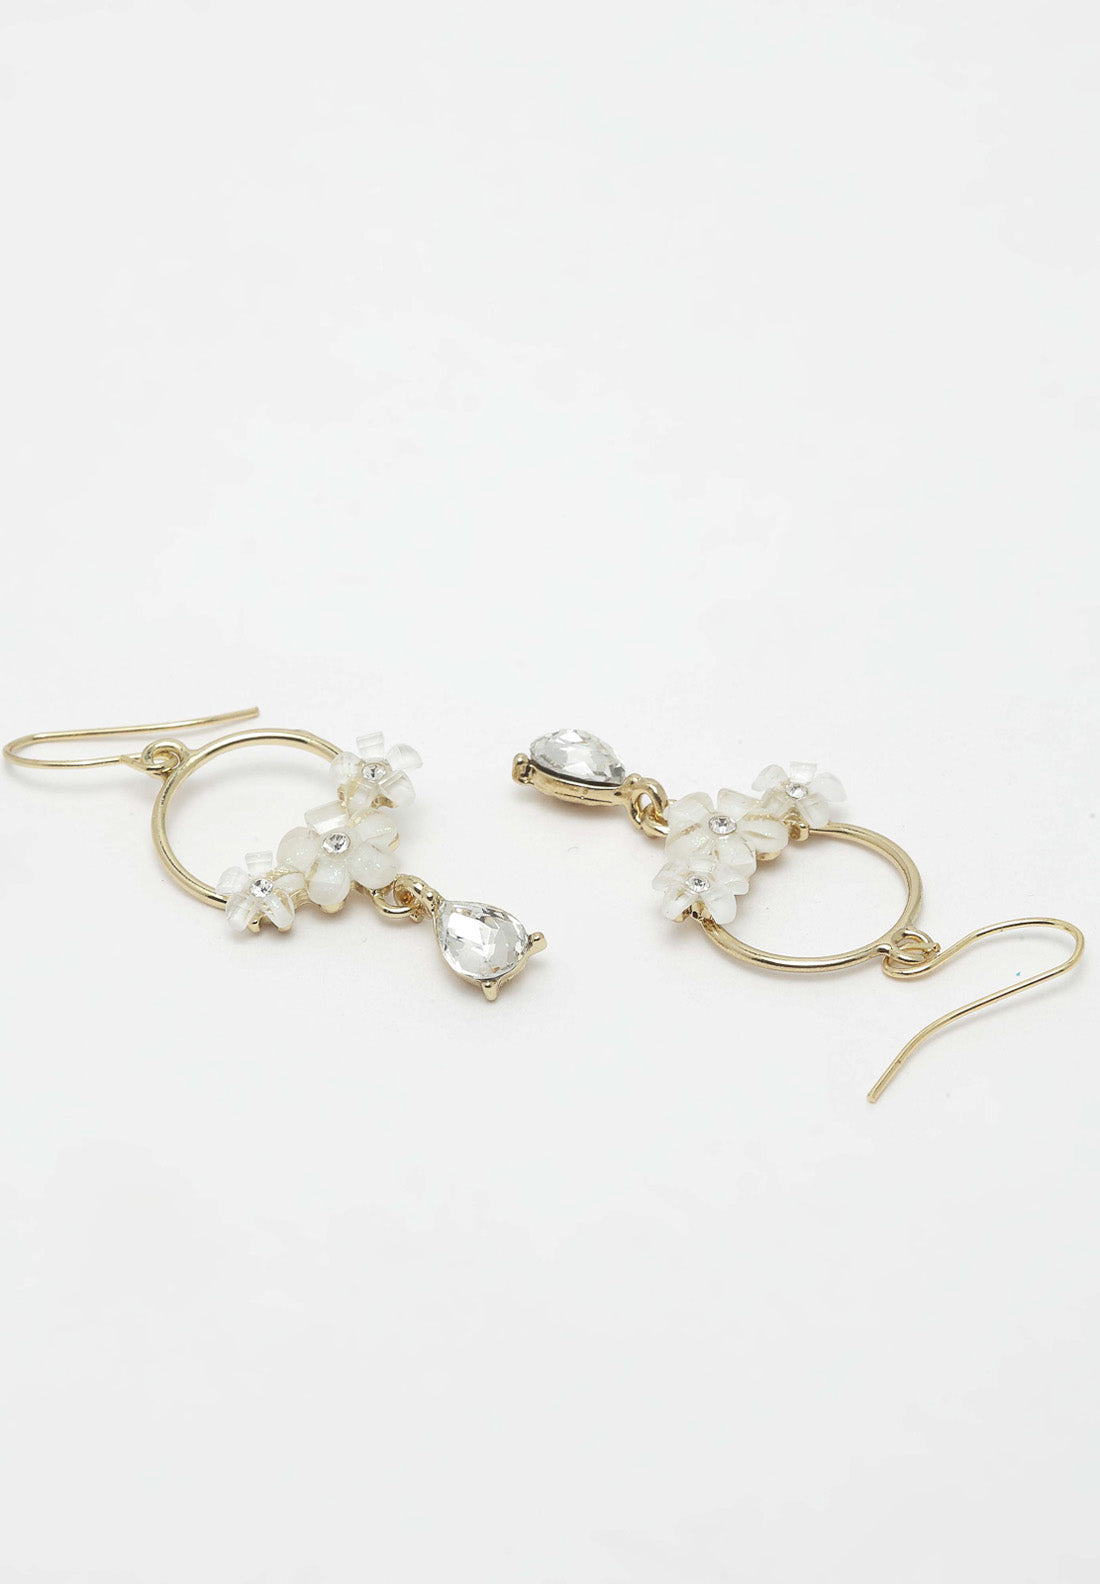 Avant-Garde Paris Gold & White Floral Crystal Earrings